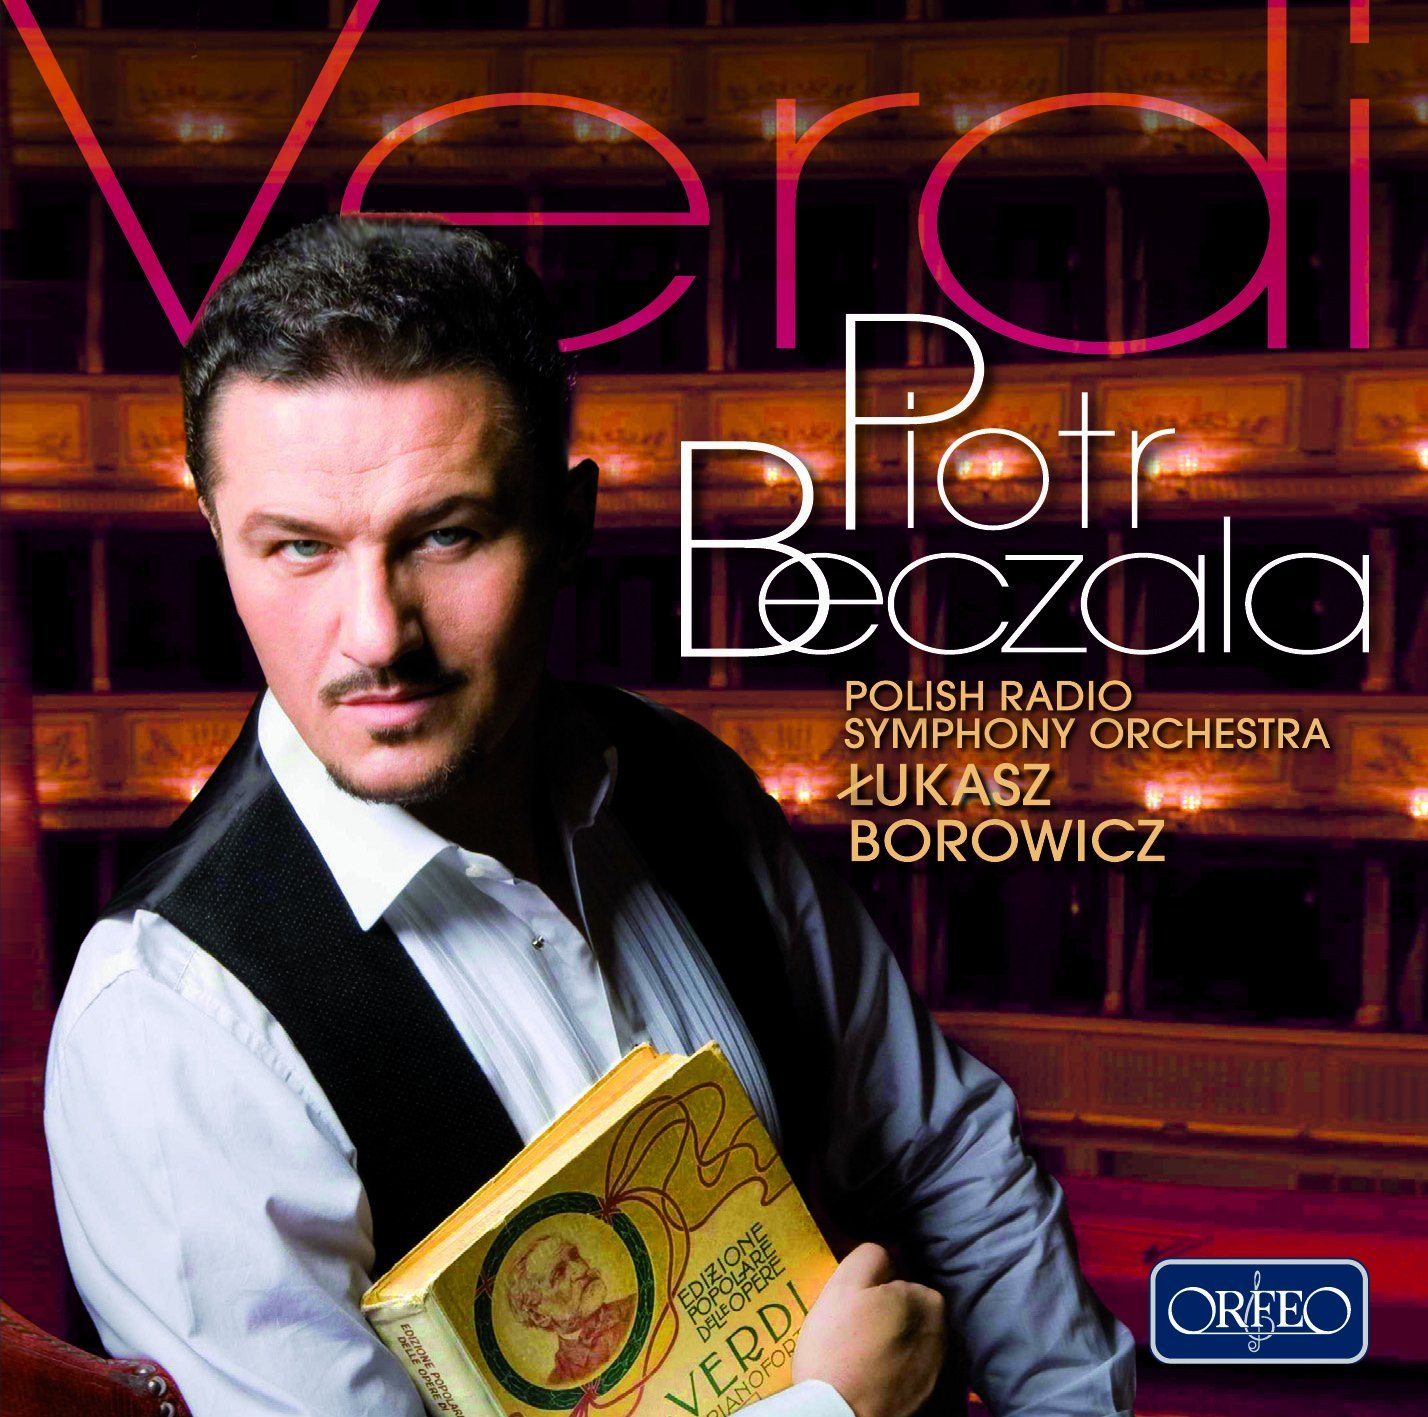 Verdi on Orfeo Label